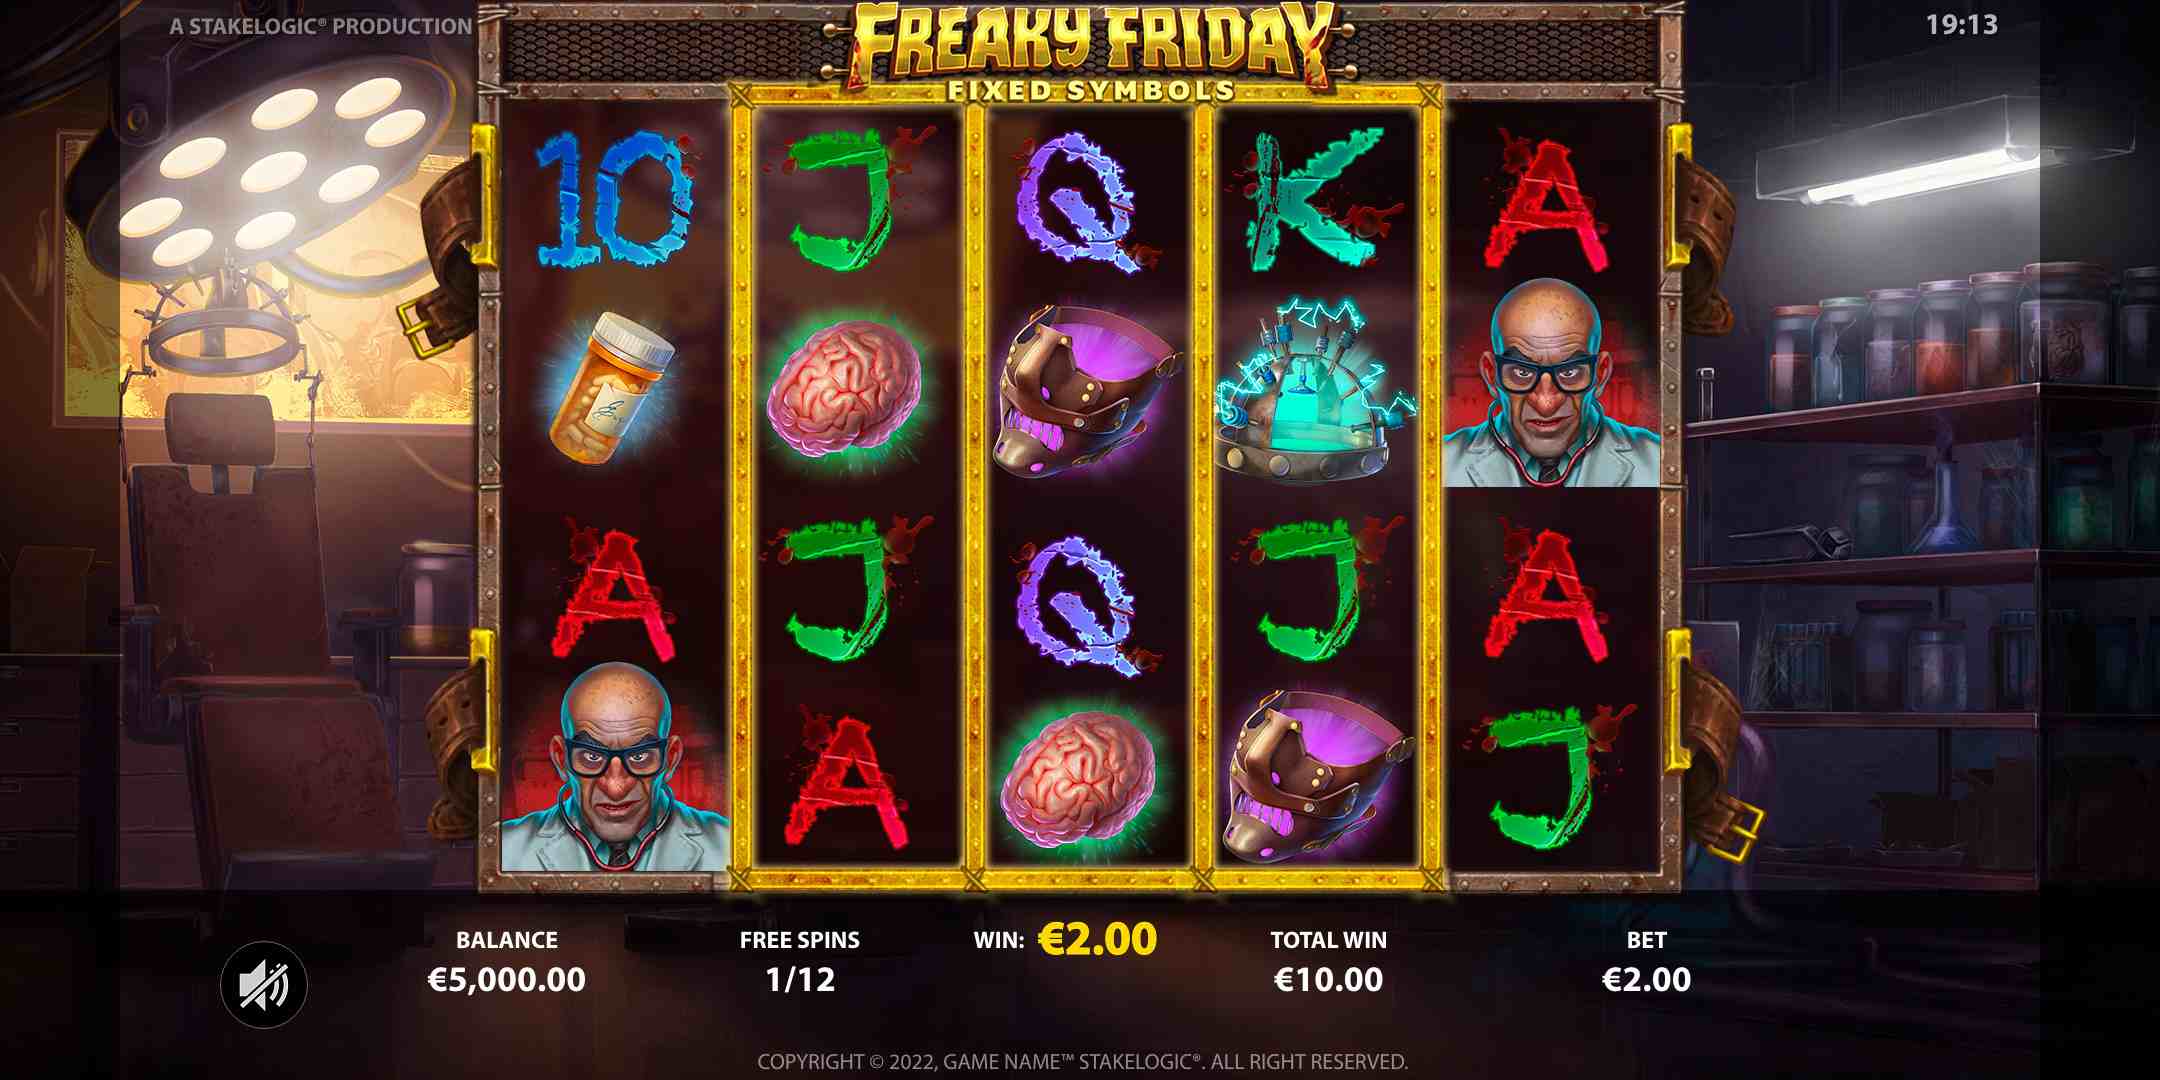 Freaky Friday Slot Free Spins